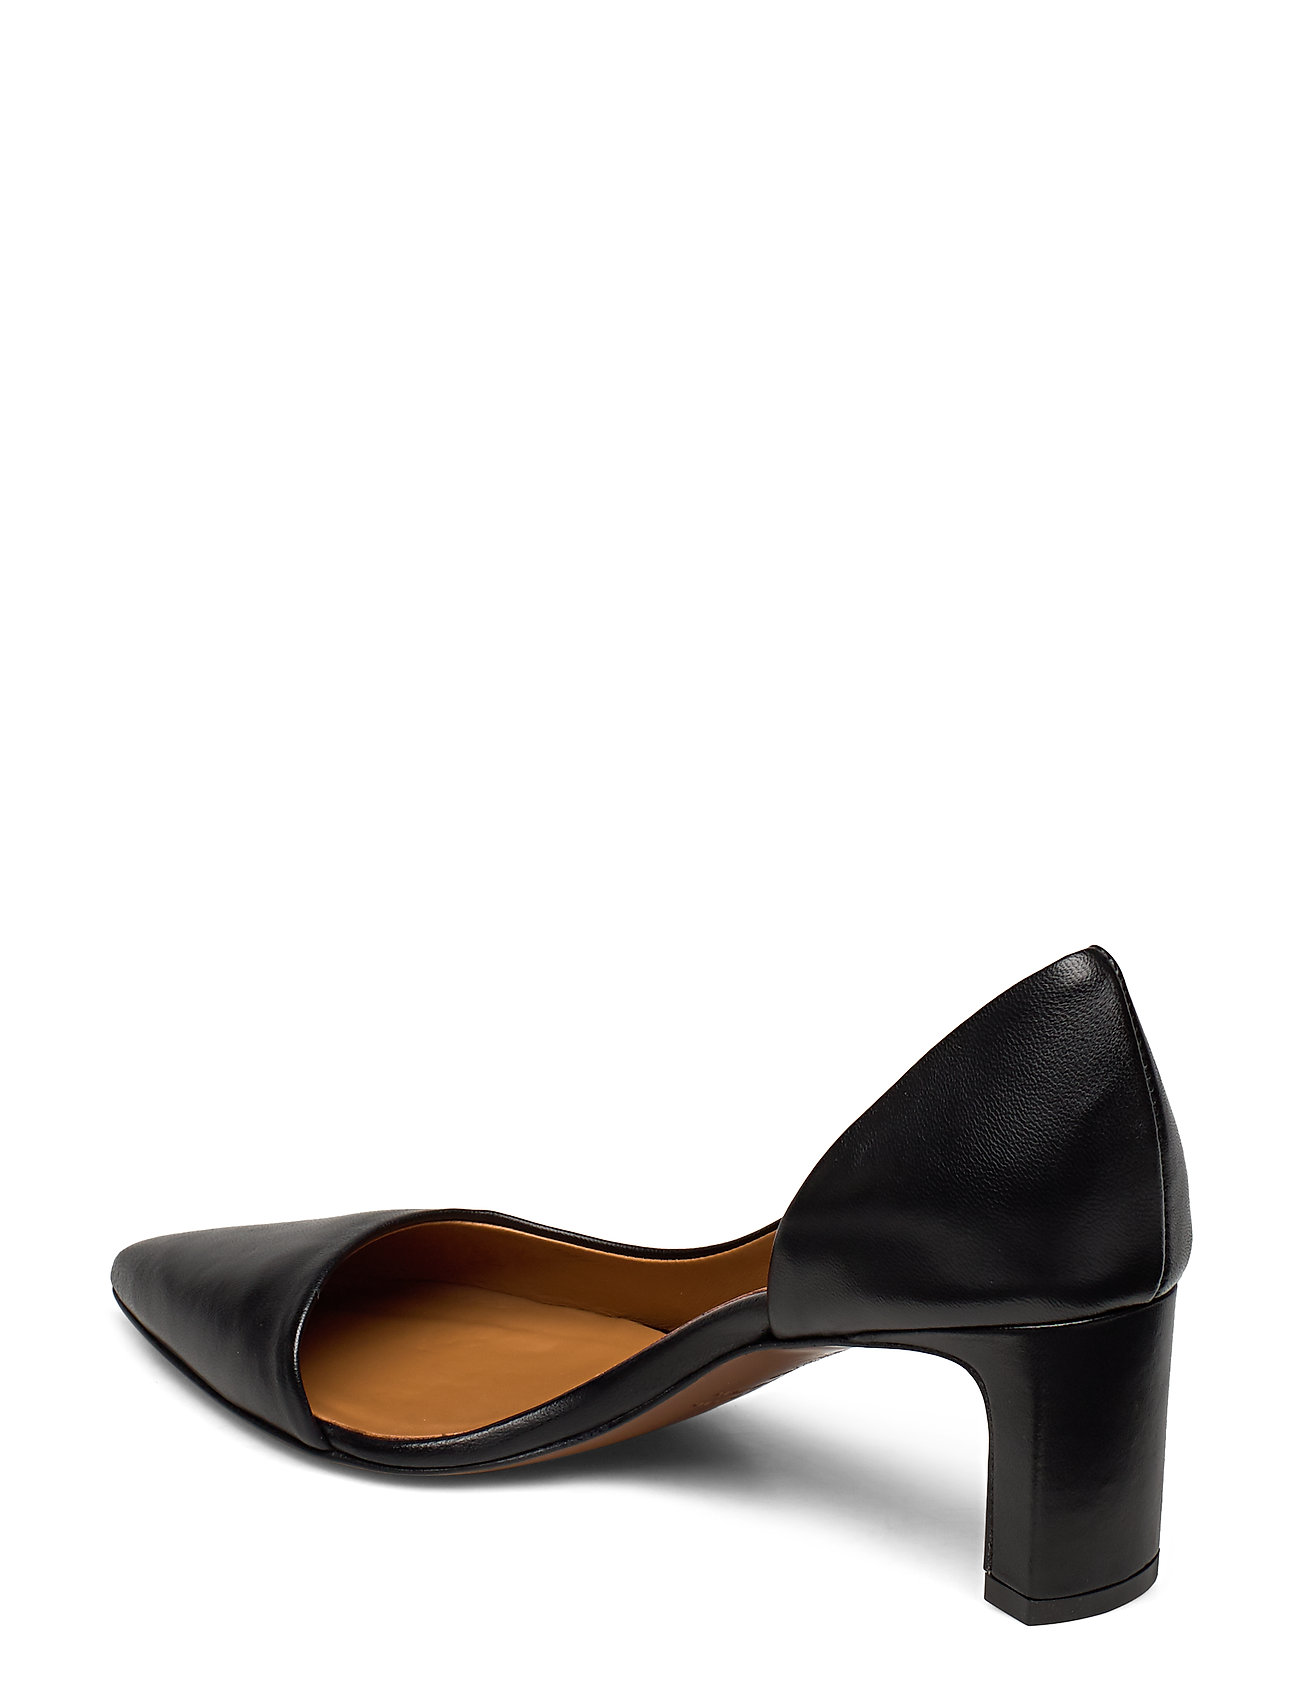 Carmiano Black Nappa Shoes Heels 110829 - 7